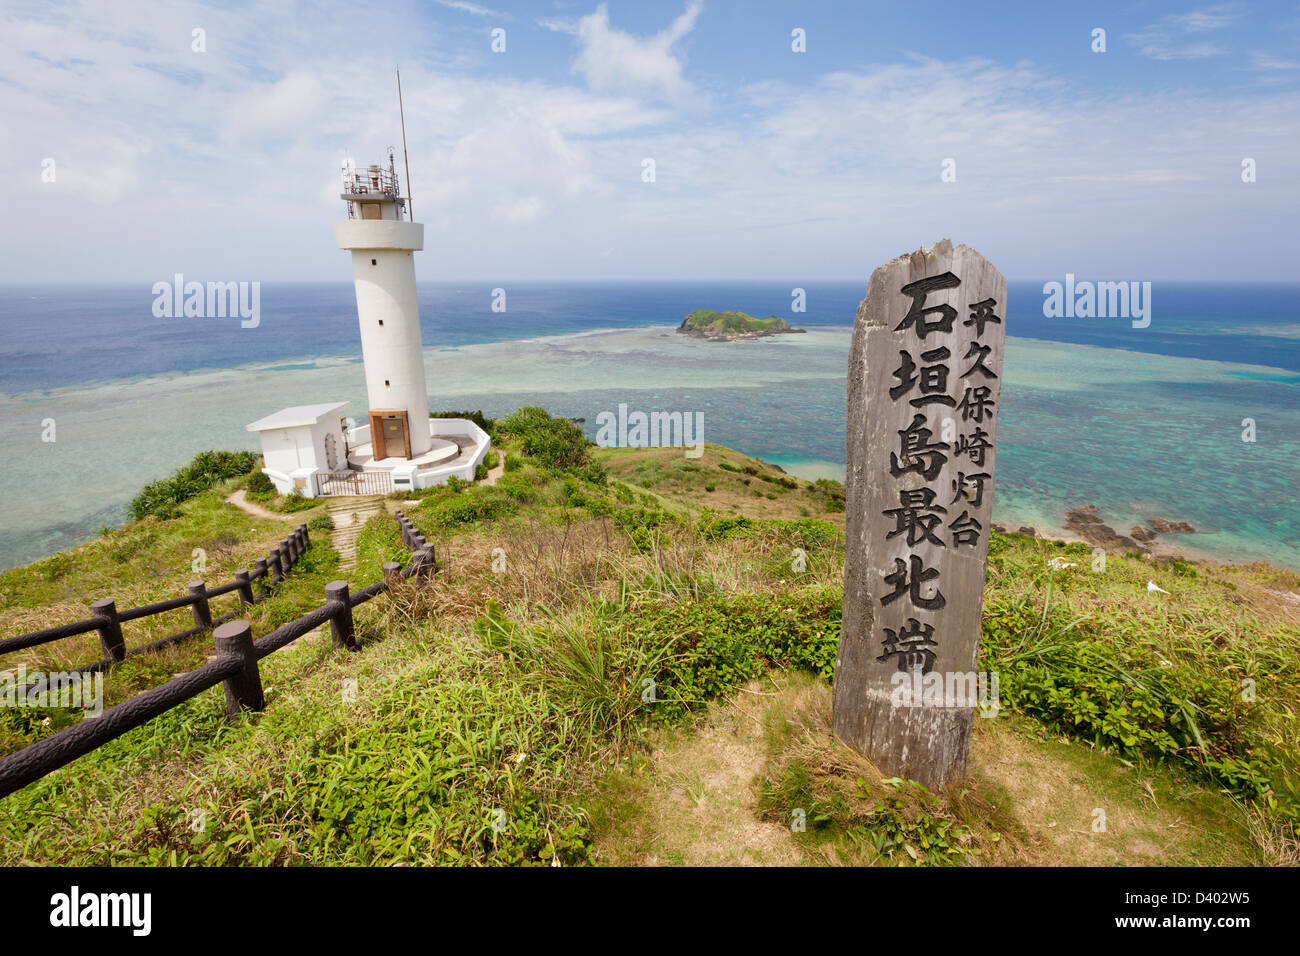 Hirakubo lighthouse on the tropical Island of Ishigaki in Okinawa prefecture, Japan. Stock Photo